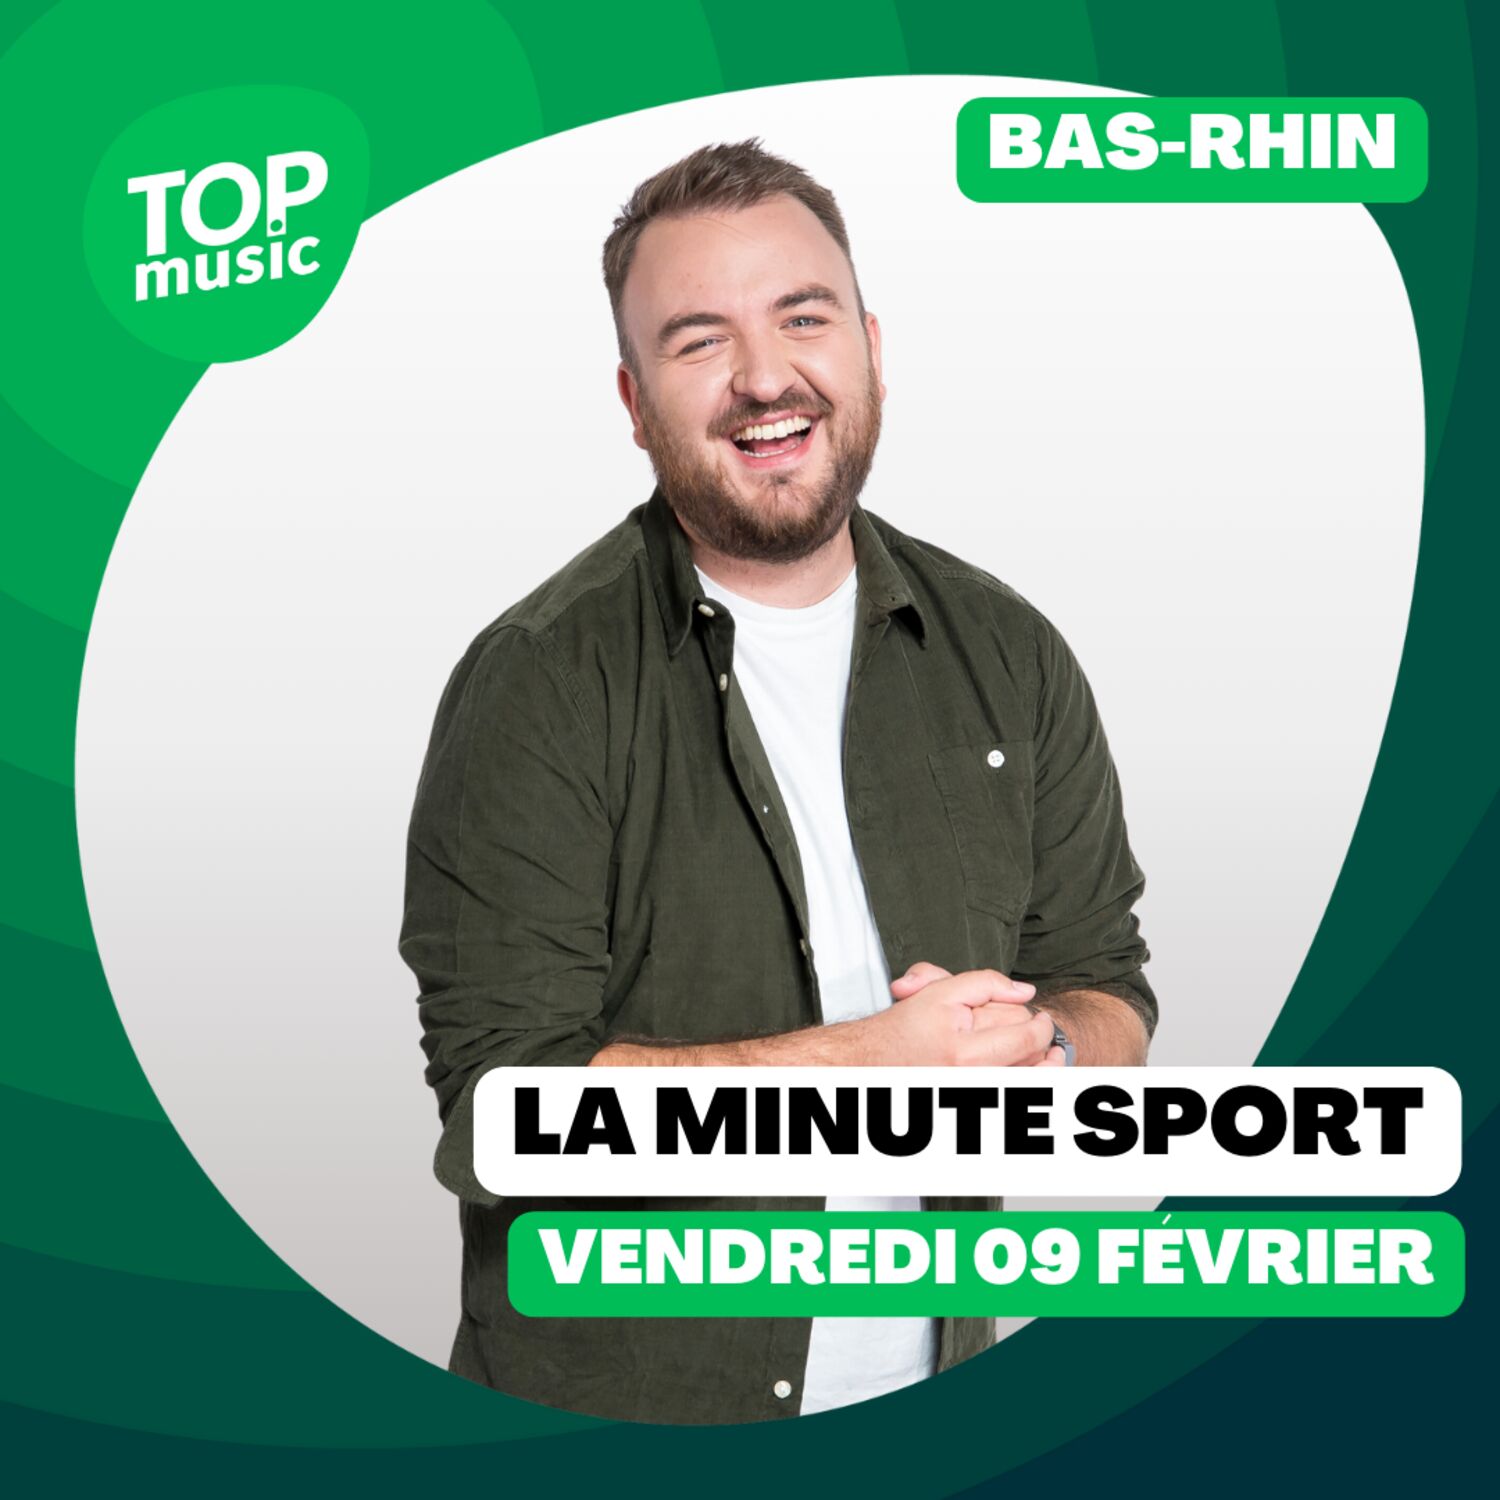 La Minute sport du Bas-Rhin - vendredi 09 février